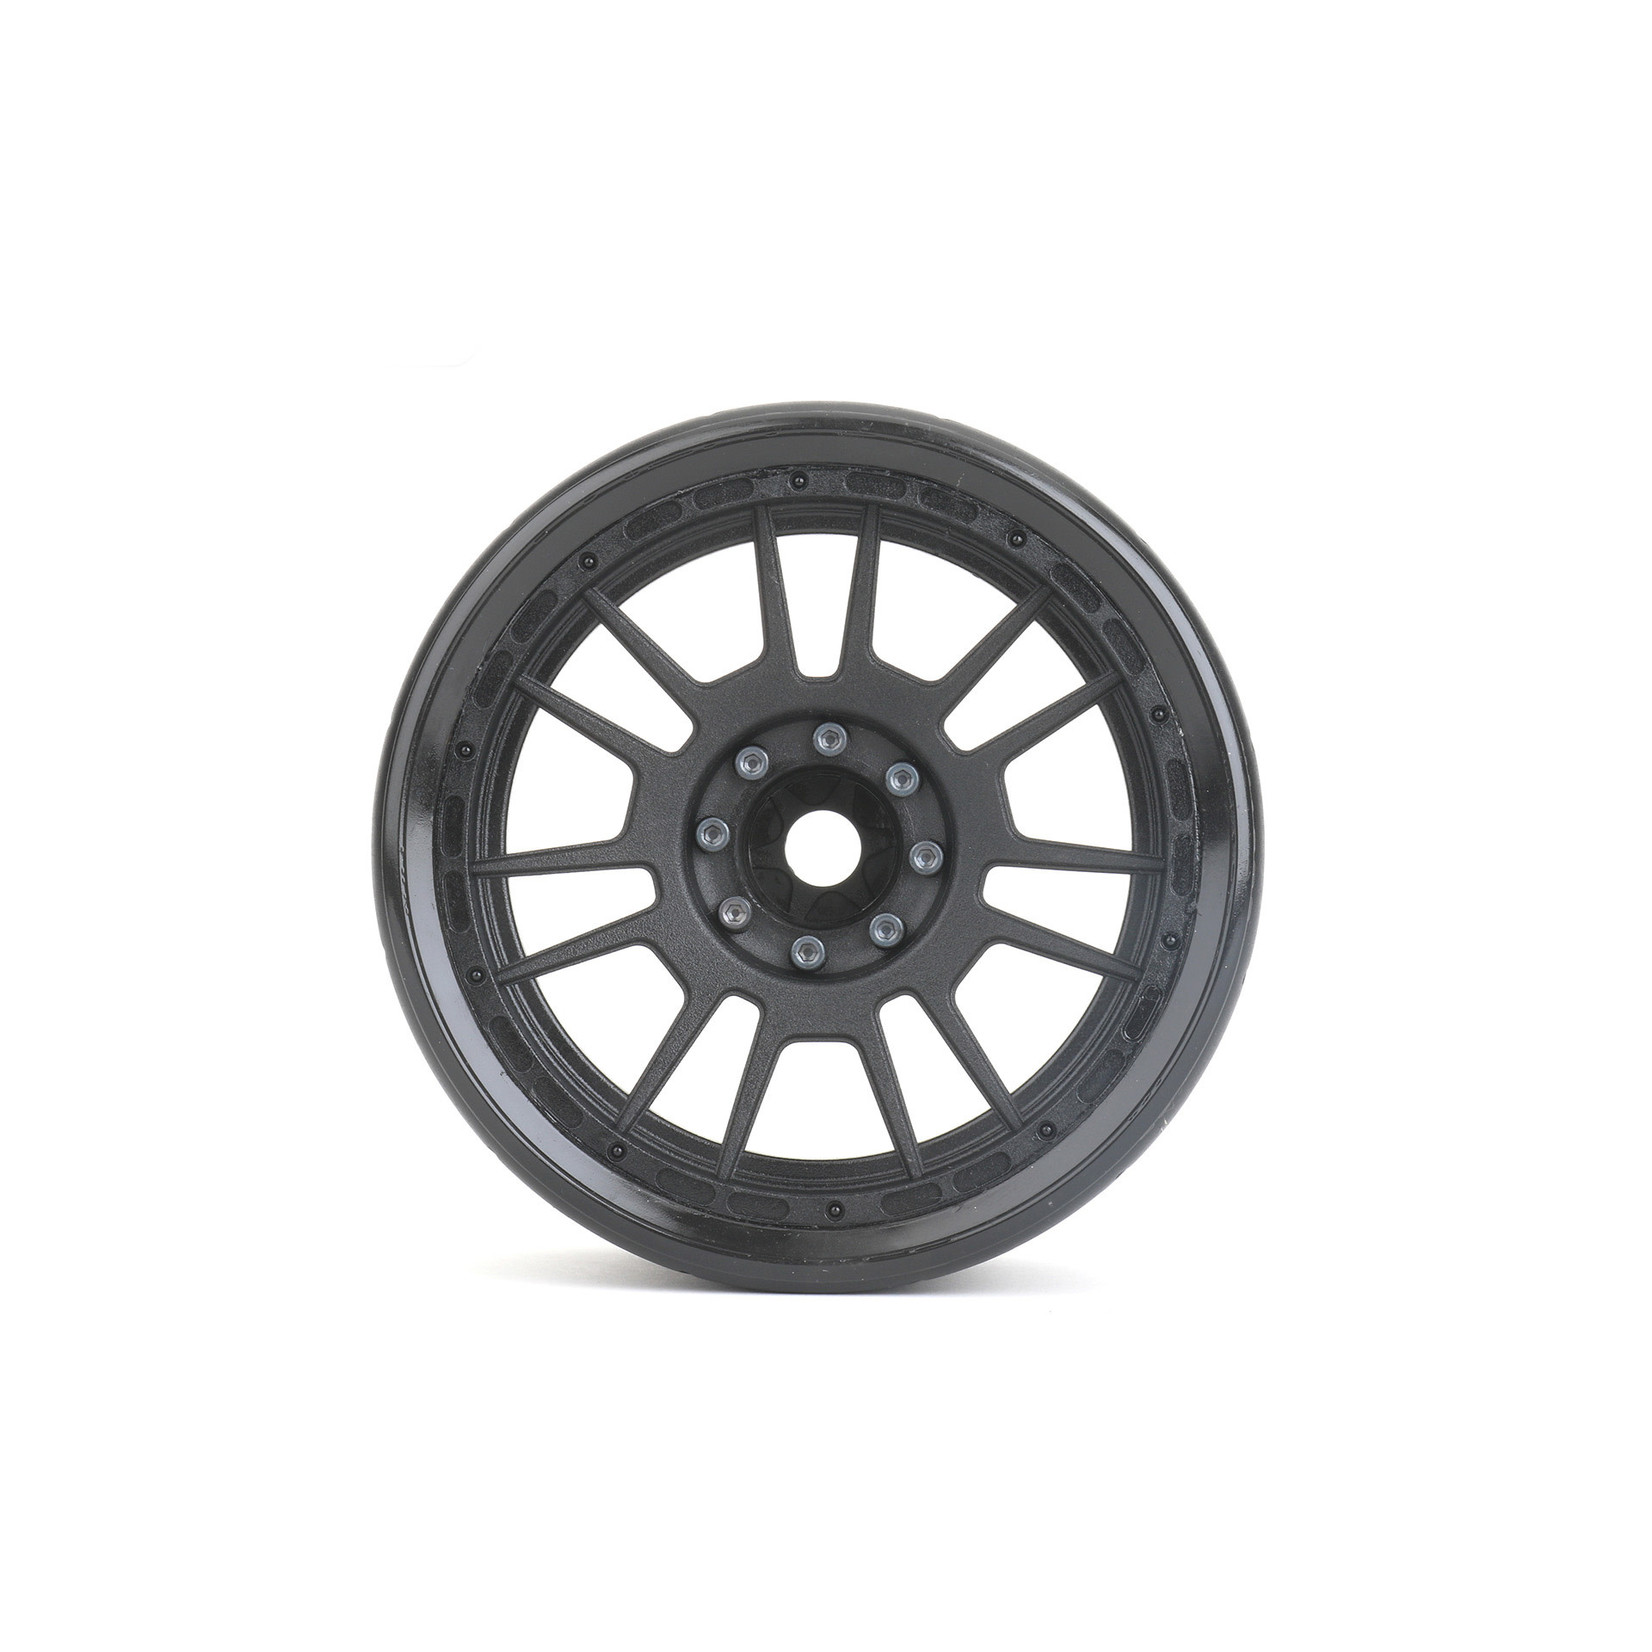 Jetko Tires Jetko 1/8 SMT 4.0 Black Phoenix Tires Mounted on Black Claw Rims, Medium Soft, Belted, 17mm 1/2" Offset #JKO1901CBMSGBB2